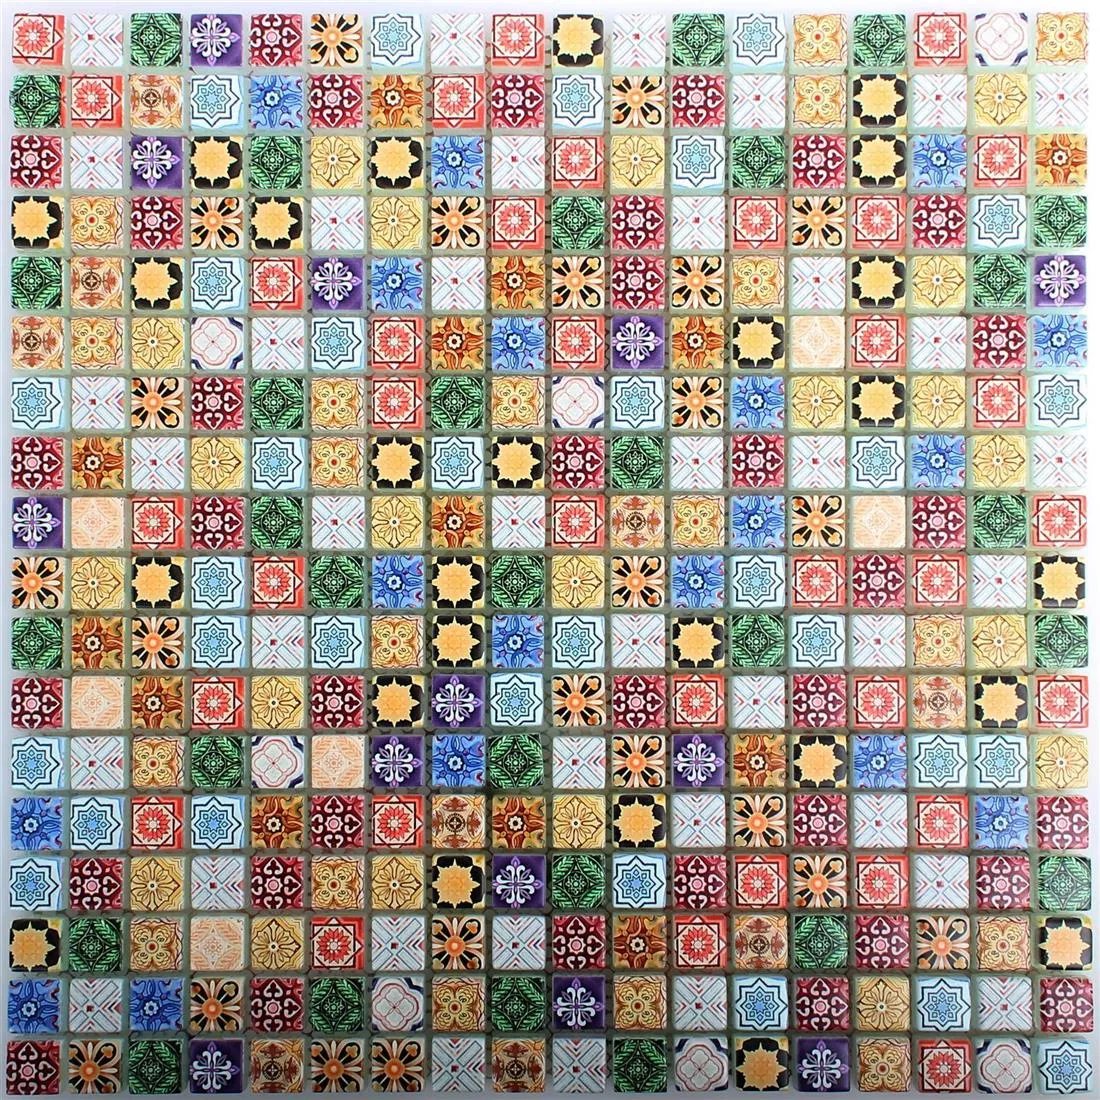 Sample Glass Mosaic Tiles Marrakech Colored